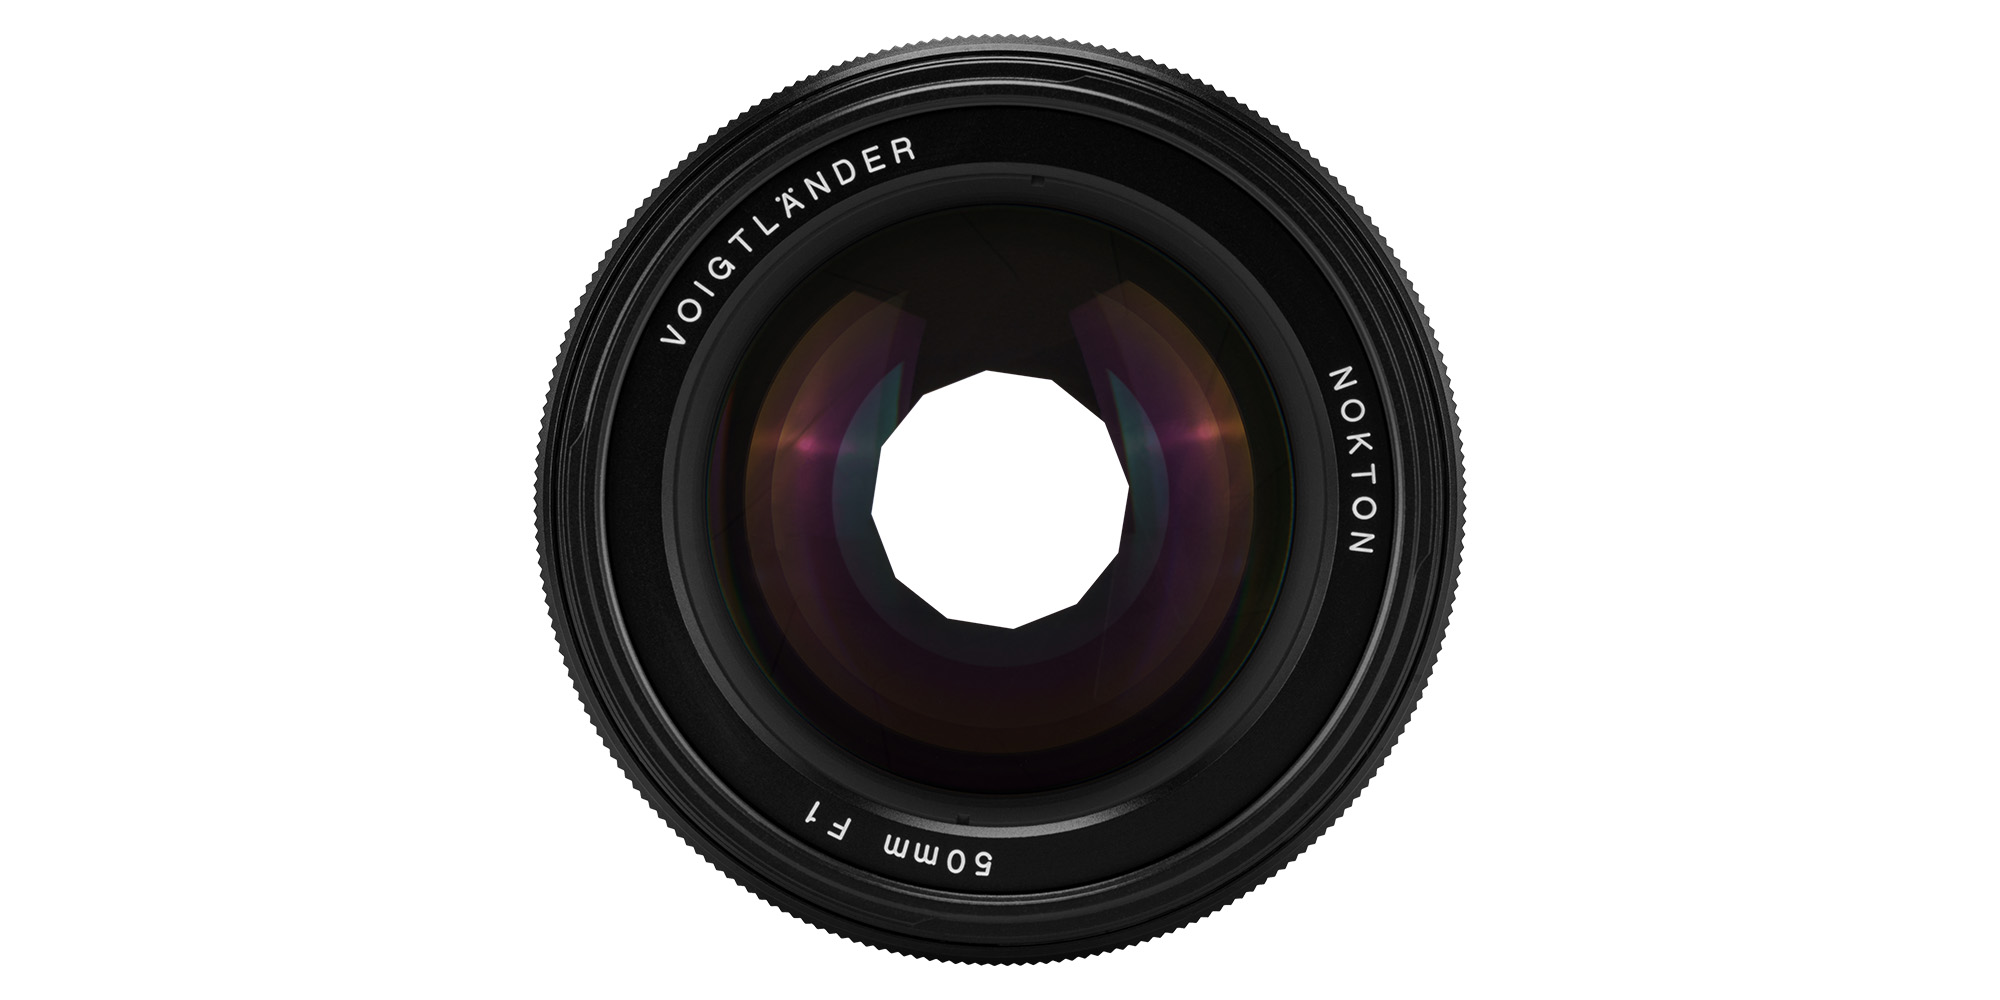 Obiektyw Voigtlander Nokton 50 mm f/1,0 do Leica M